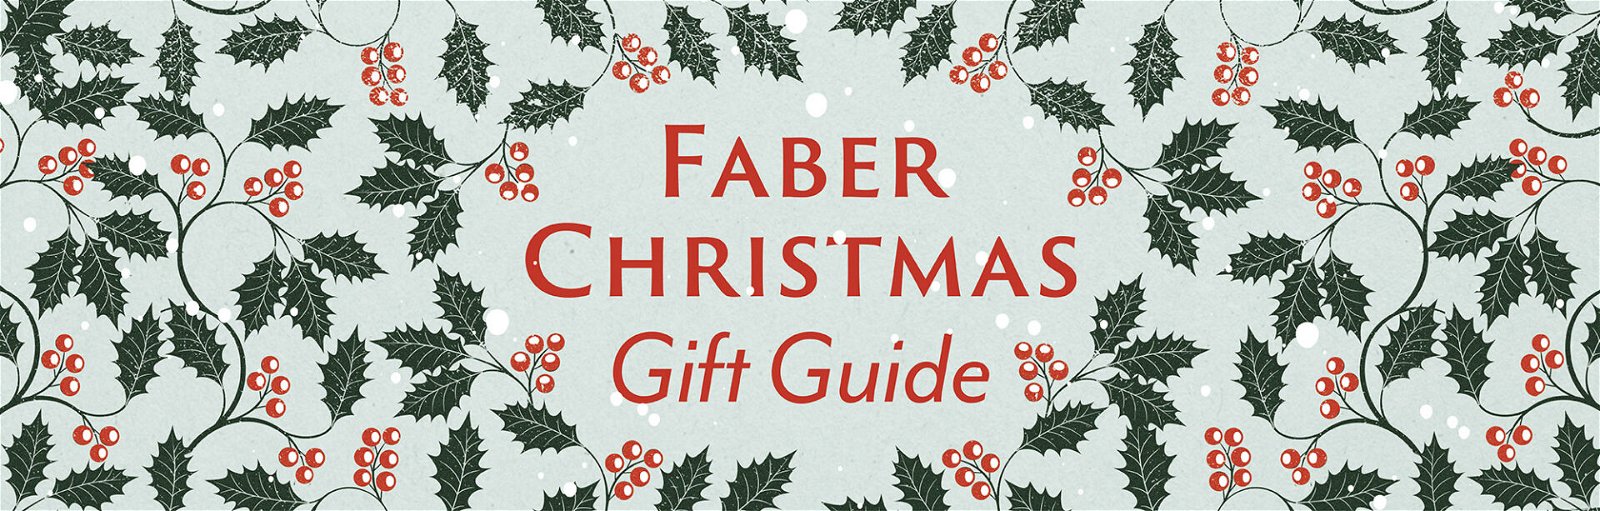 https://static.faber.co.uk/wp-content/uploads/2021/11/Faber-Christmas-Gift-Guide-1-1920x613.jpg